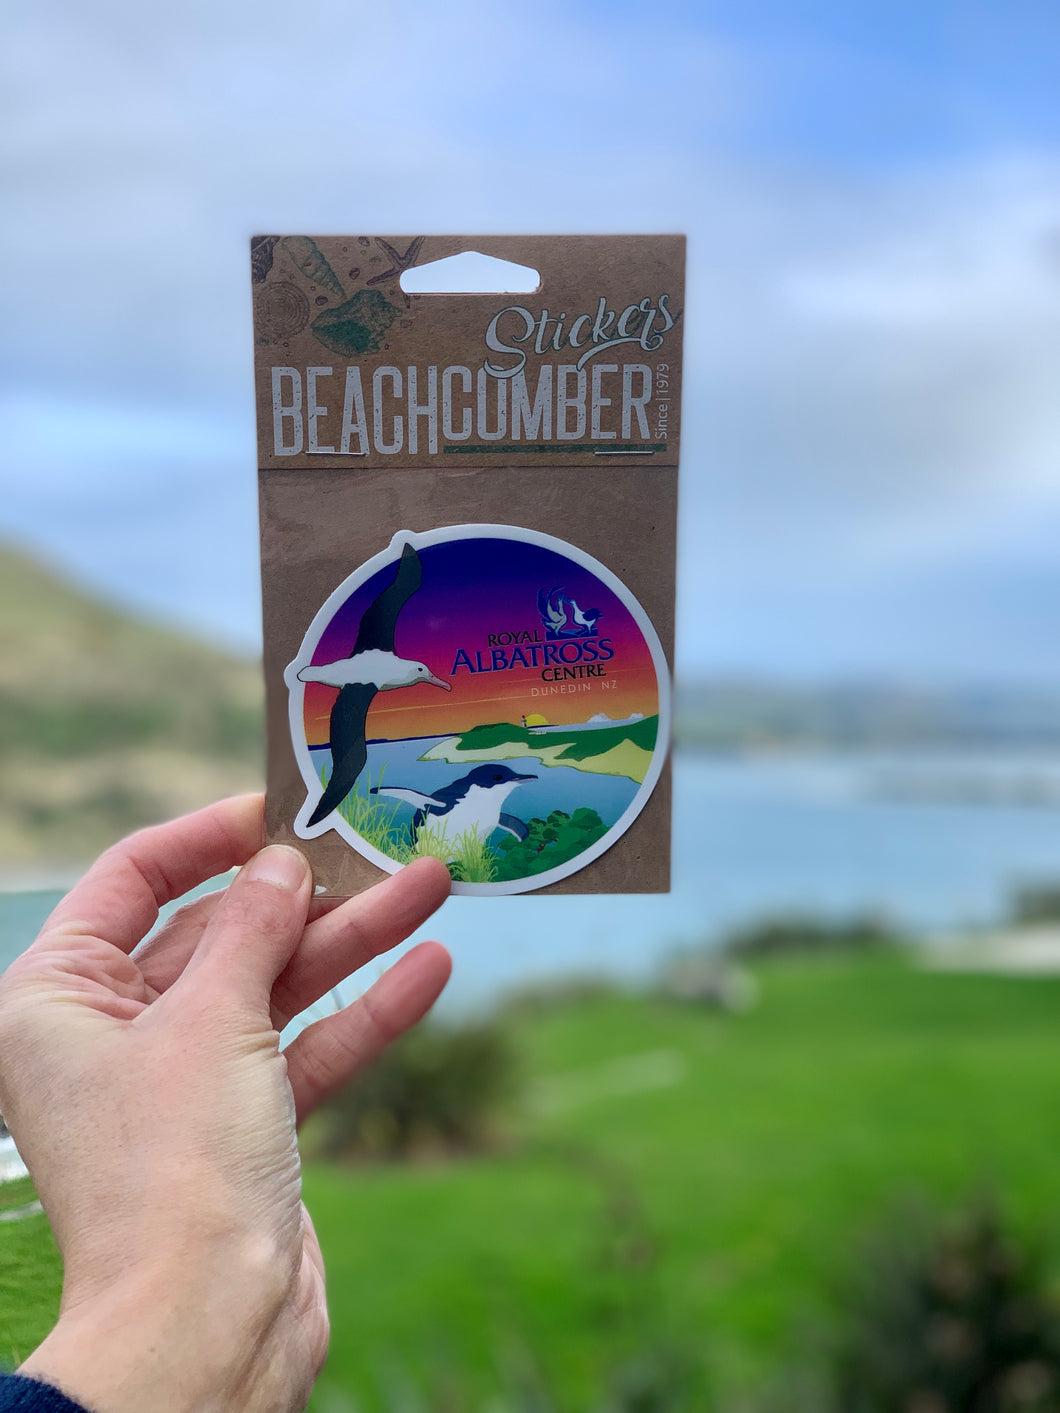 Beachcomber Sticker - 'Royal Albatross Centre' - Small